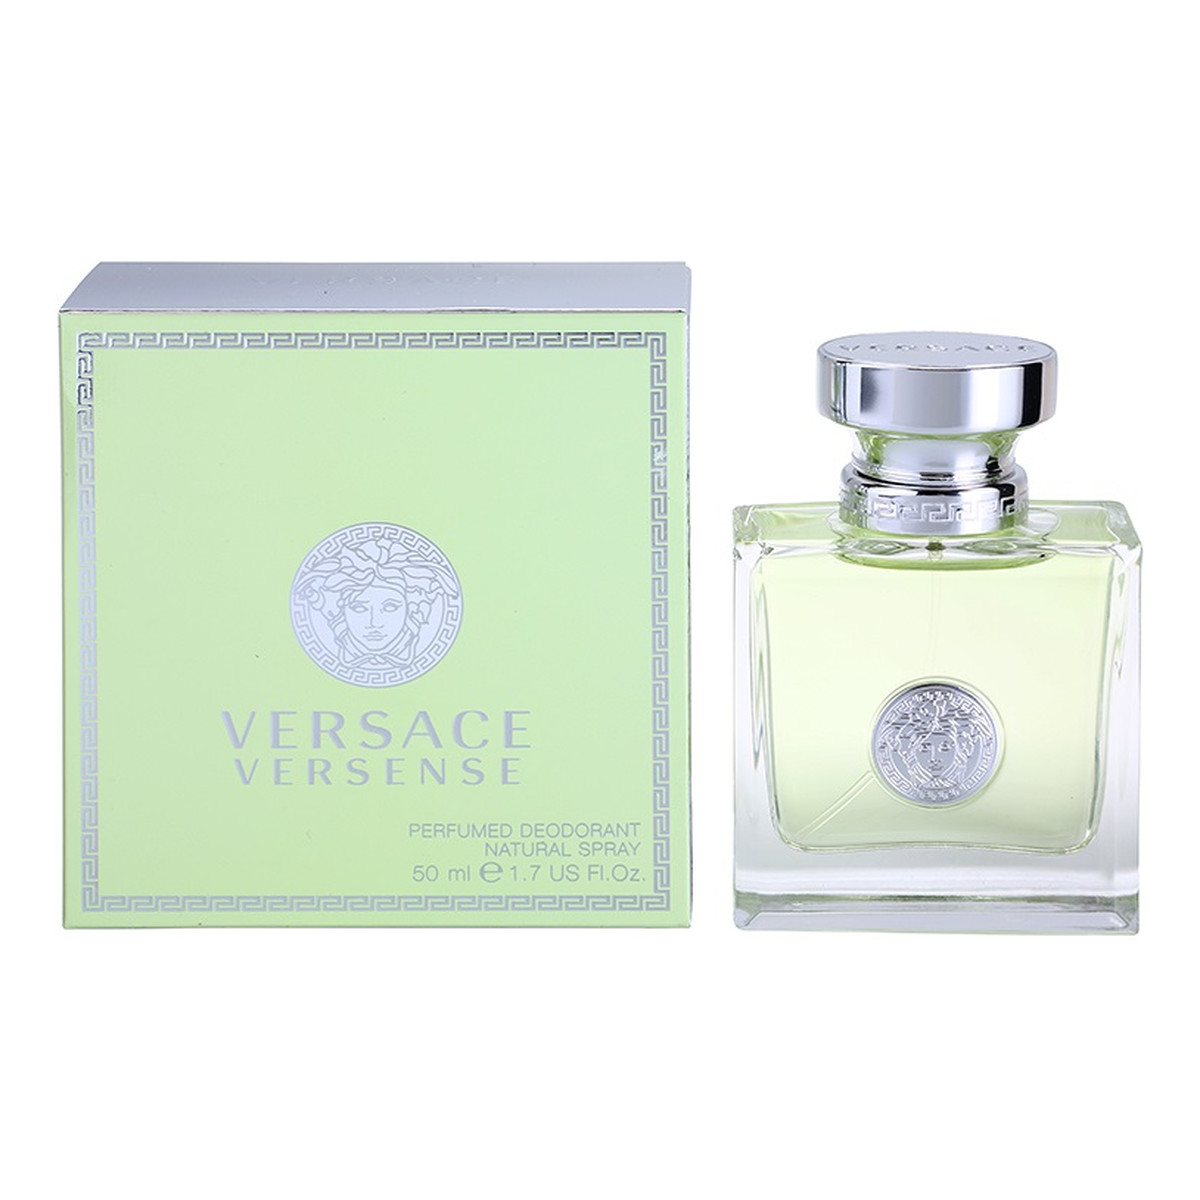 Versace Versense dezodorant z atomizerem dla kobiet 50ml